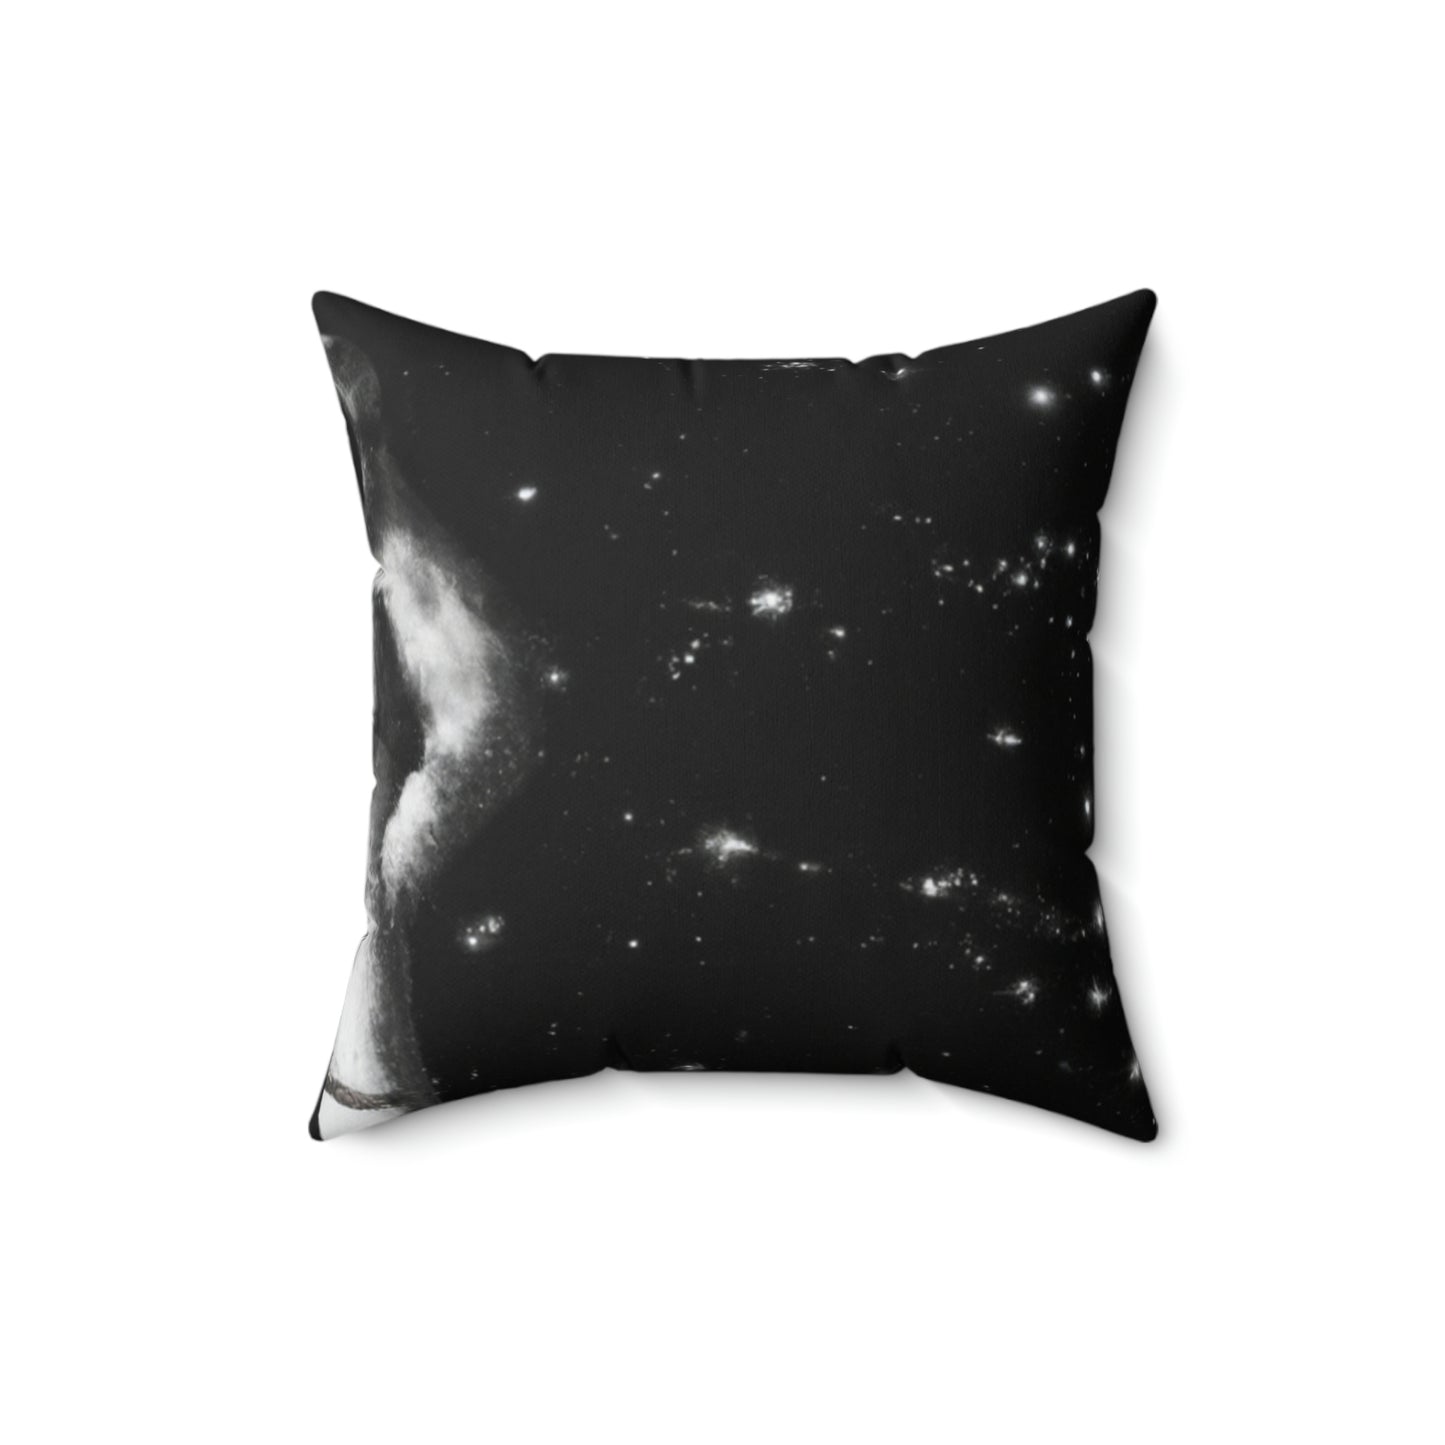 "A Celestial Sea Dance" - The Alien Square Pillow